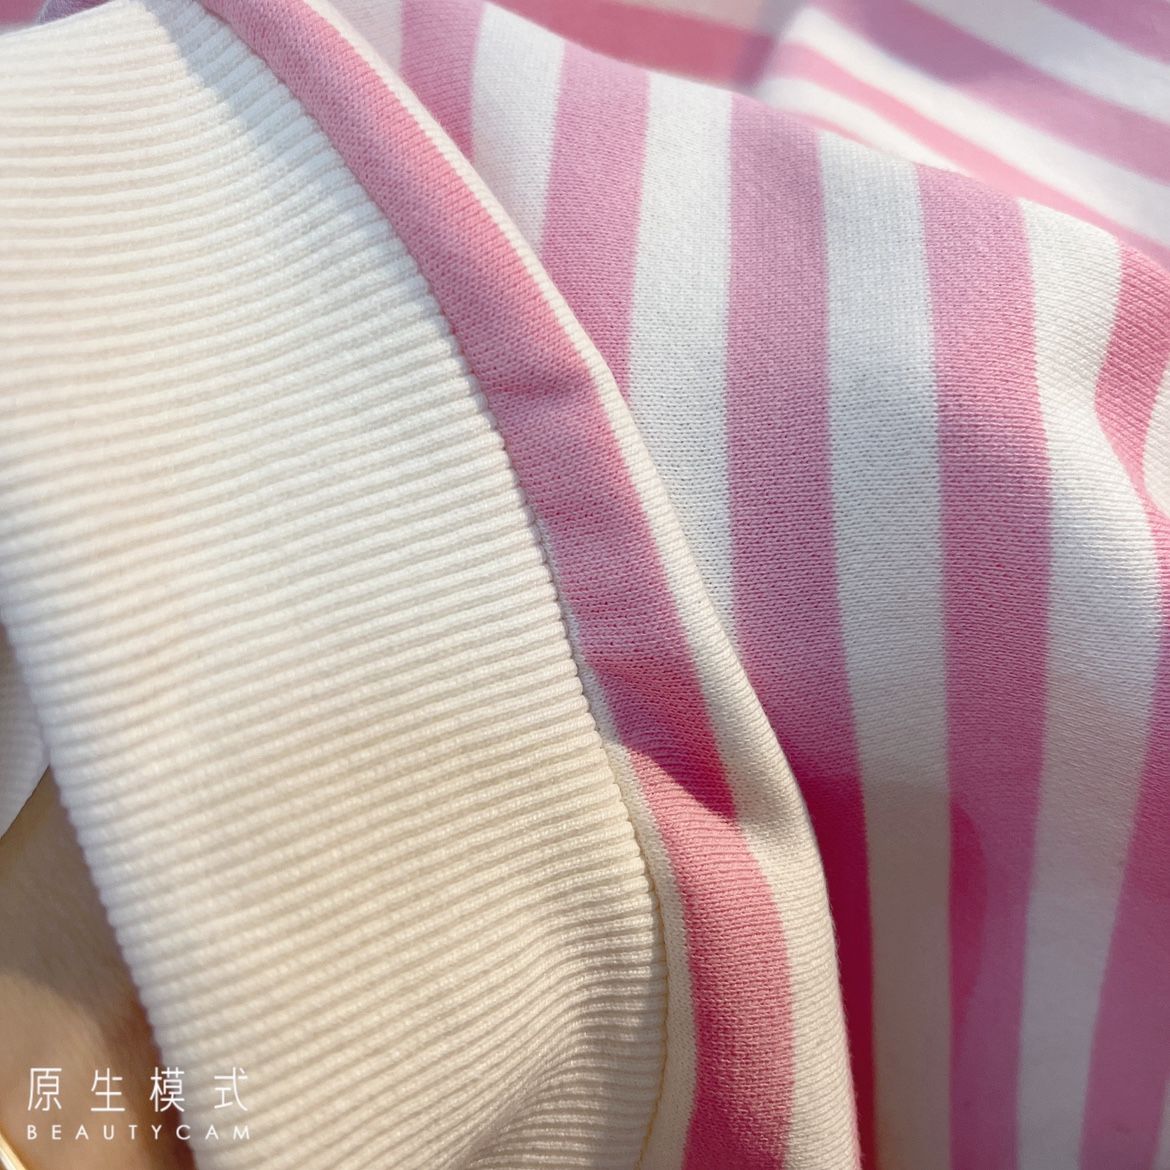 Kawaii Aesthetic White Pink Striped Sweatshirt